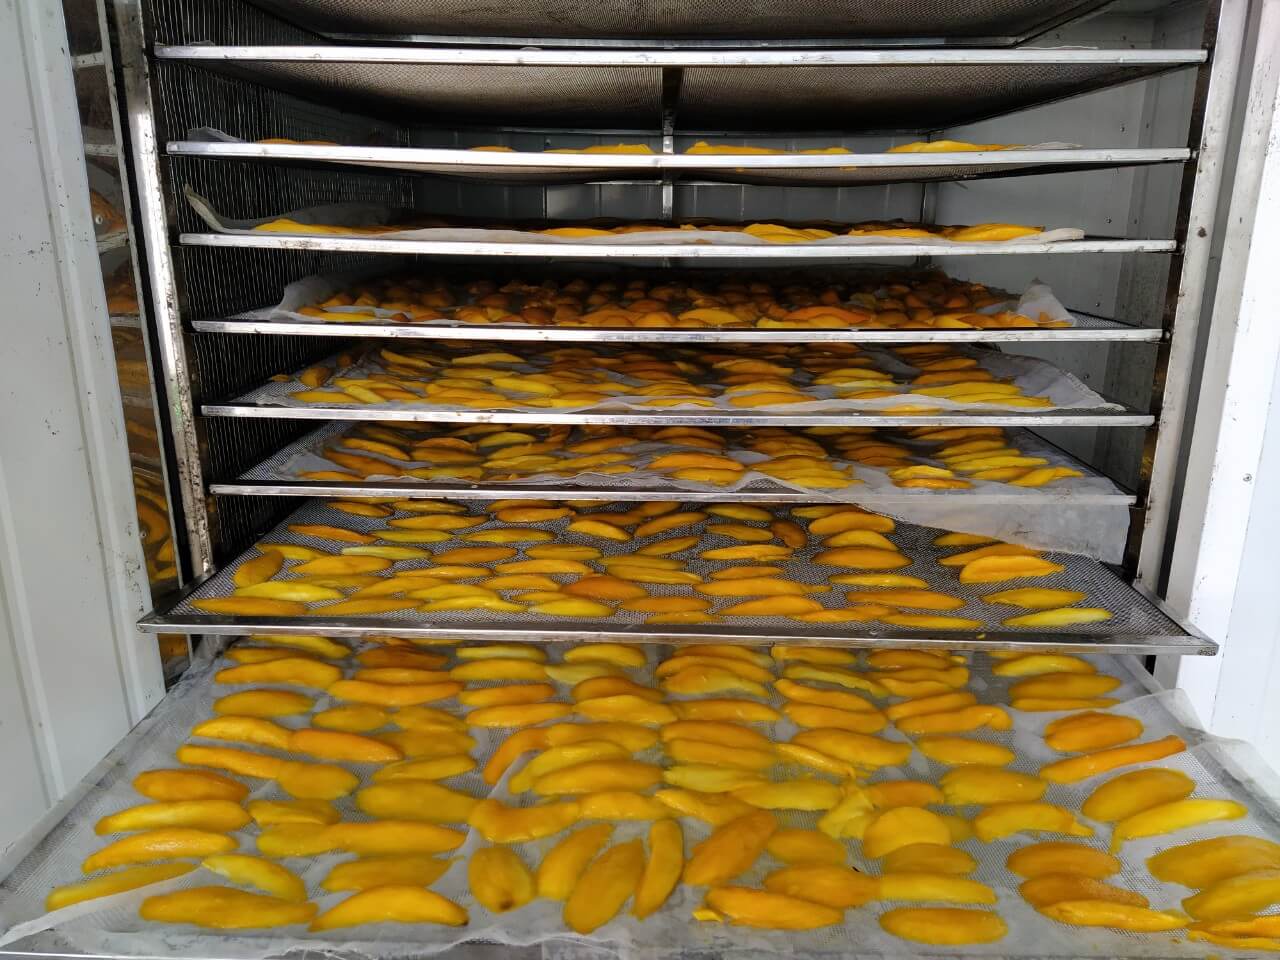 drying fruit in machine